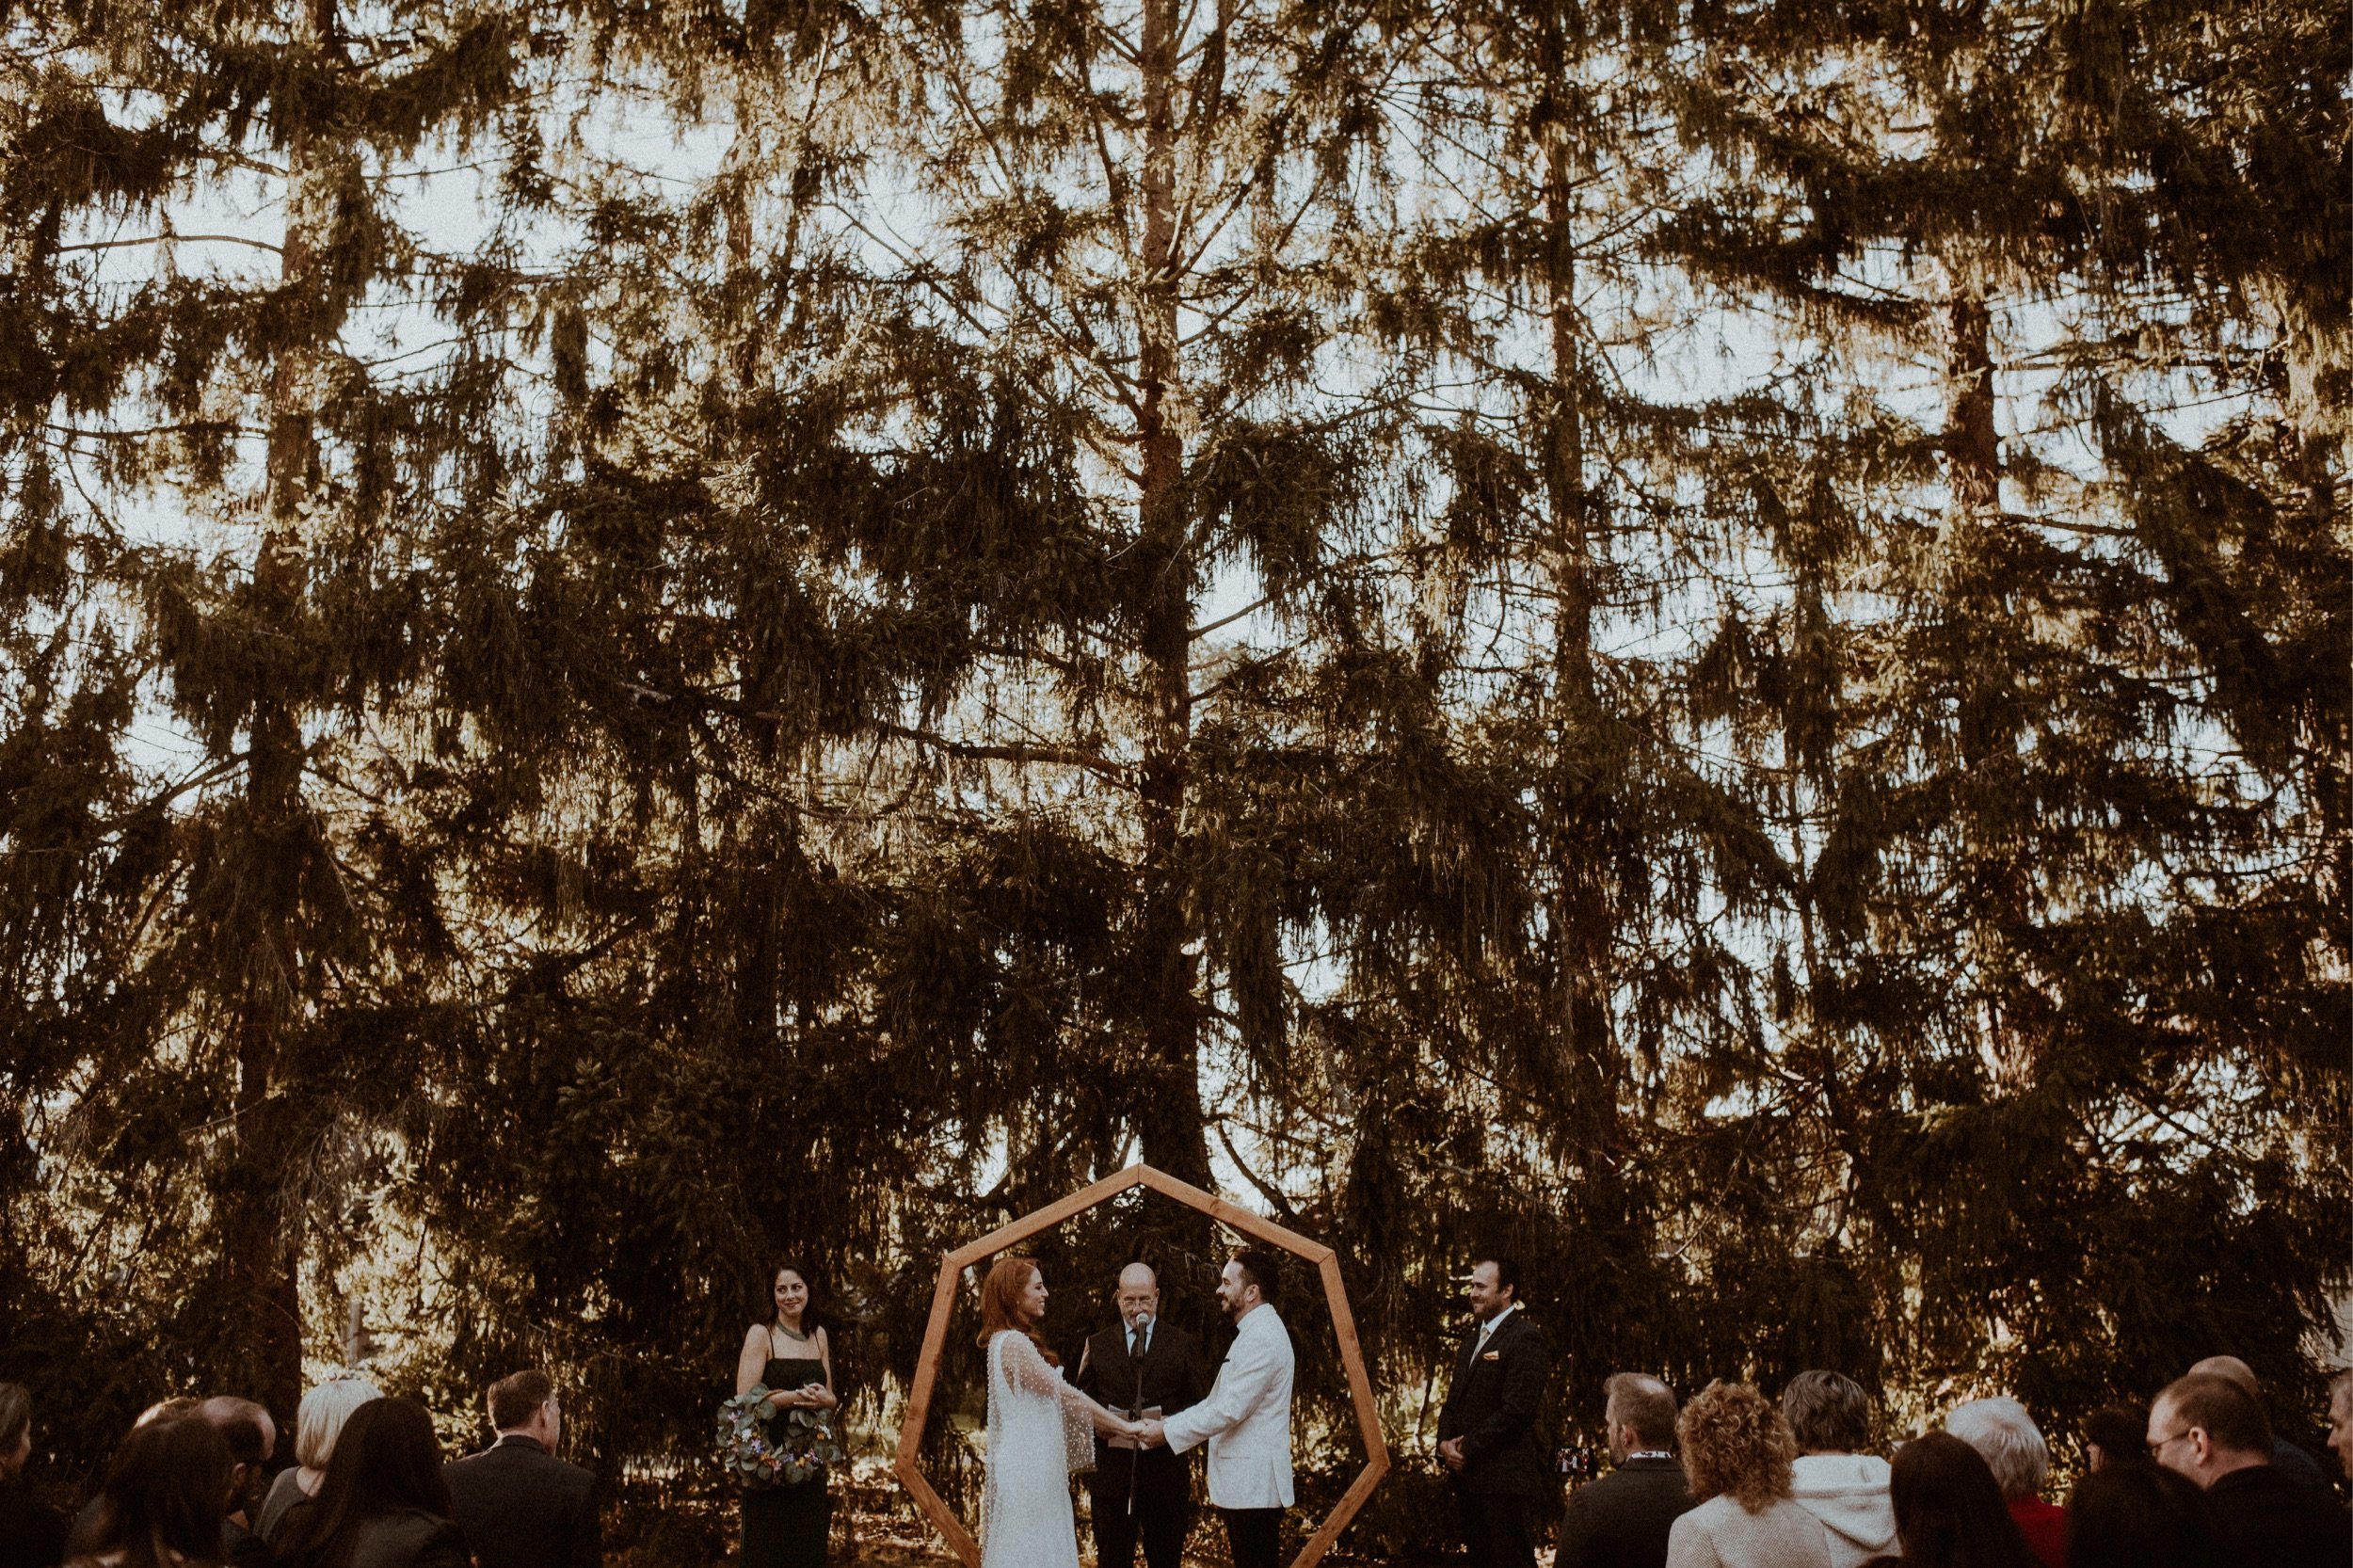 067_Timeless Backyard Wedding in Rhode Island - Vanessa Alves Photography.jpg